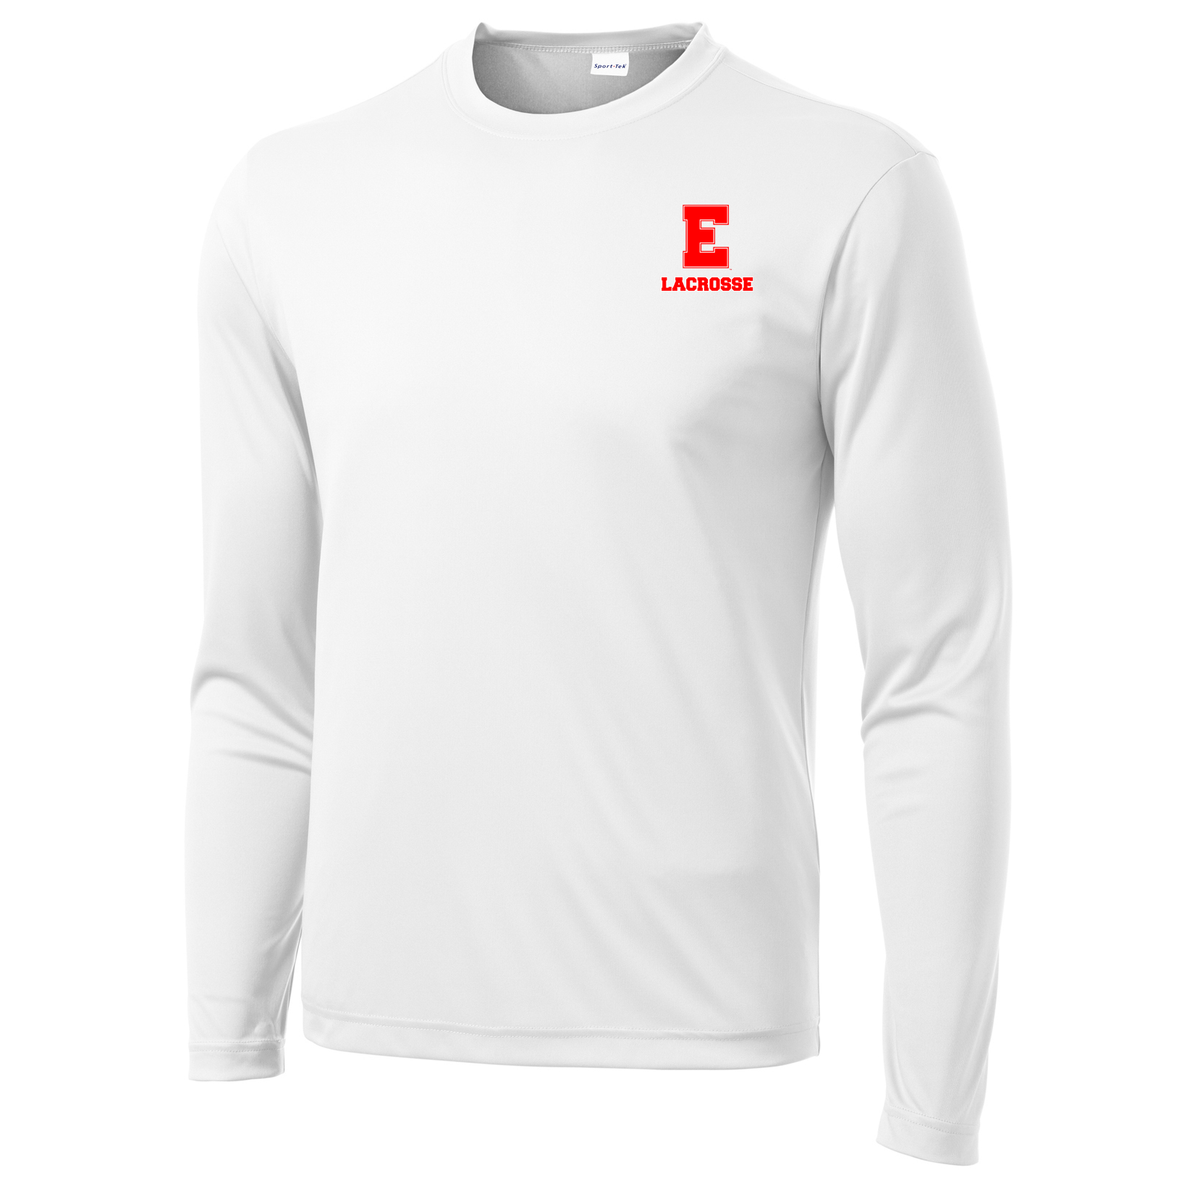 East Lacrosse Long Sleeve Performance Shirt